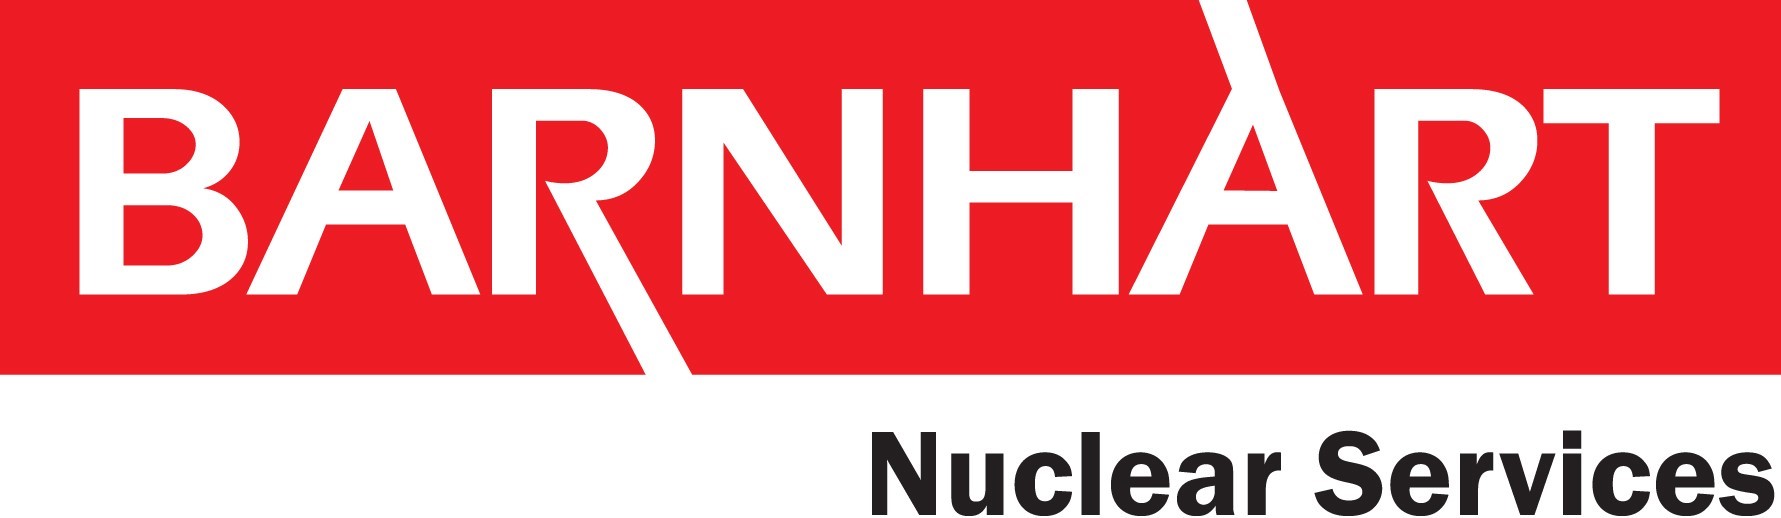 Barnhart Nuclear Services logo